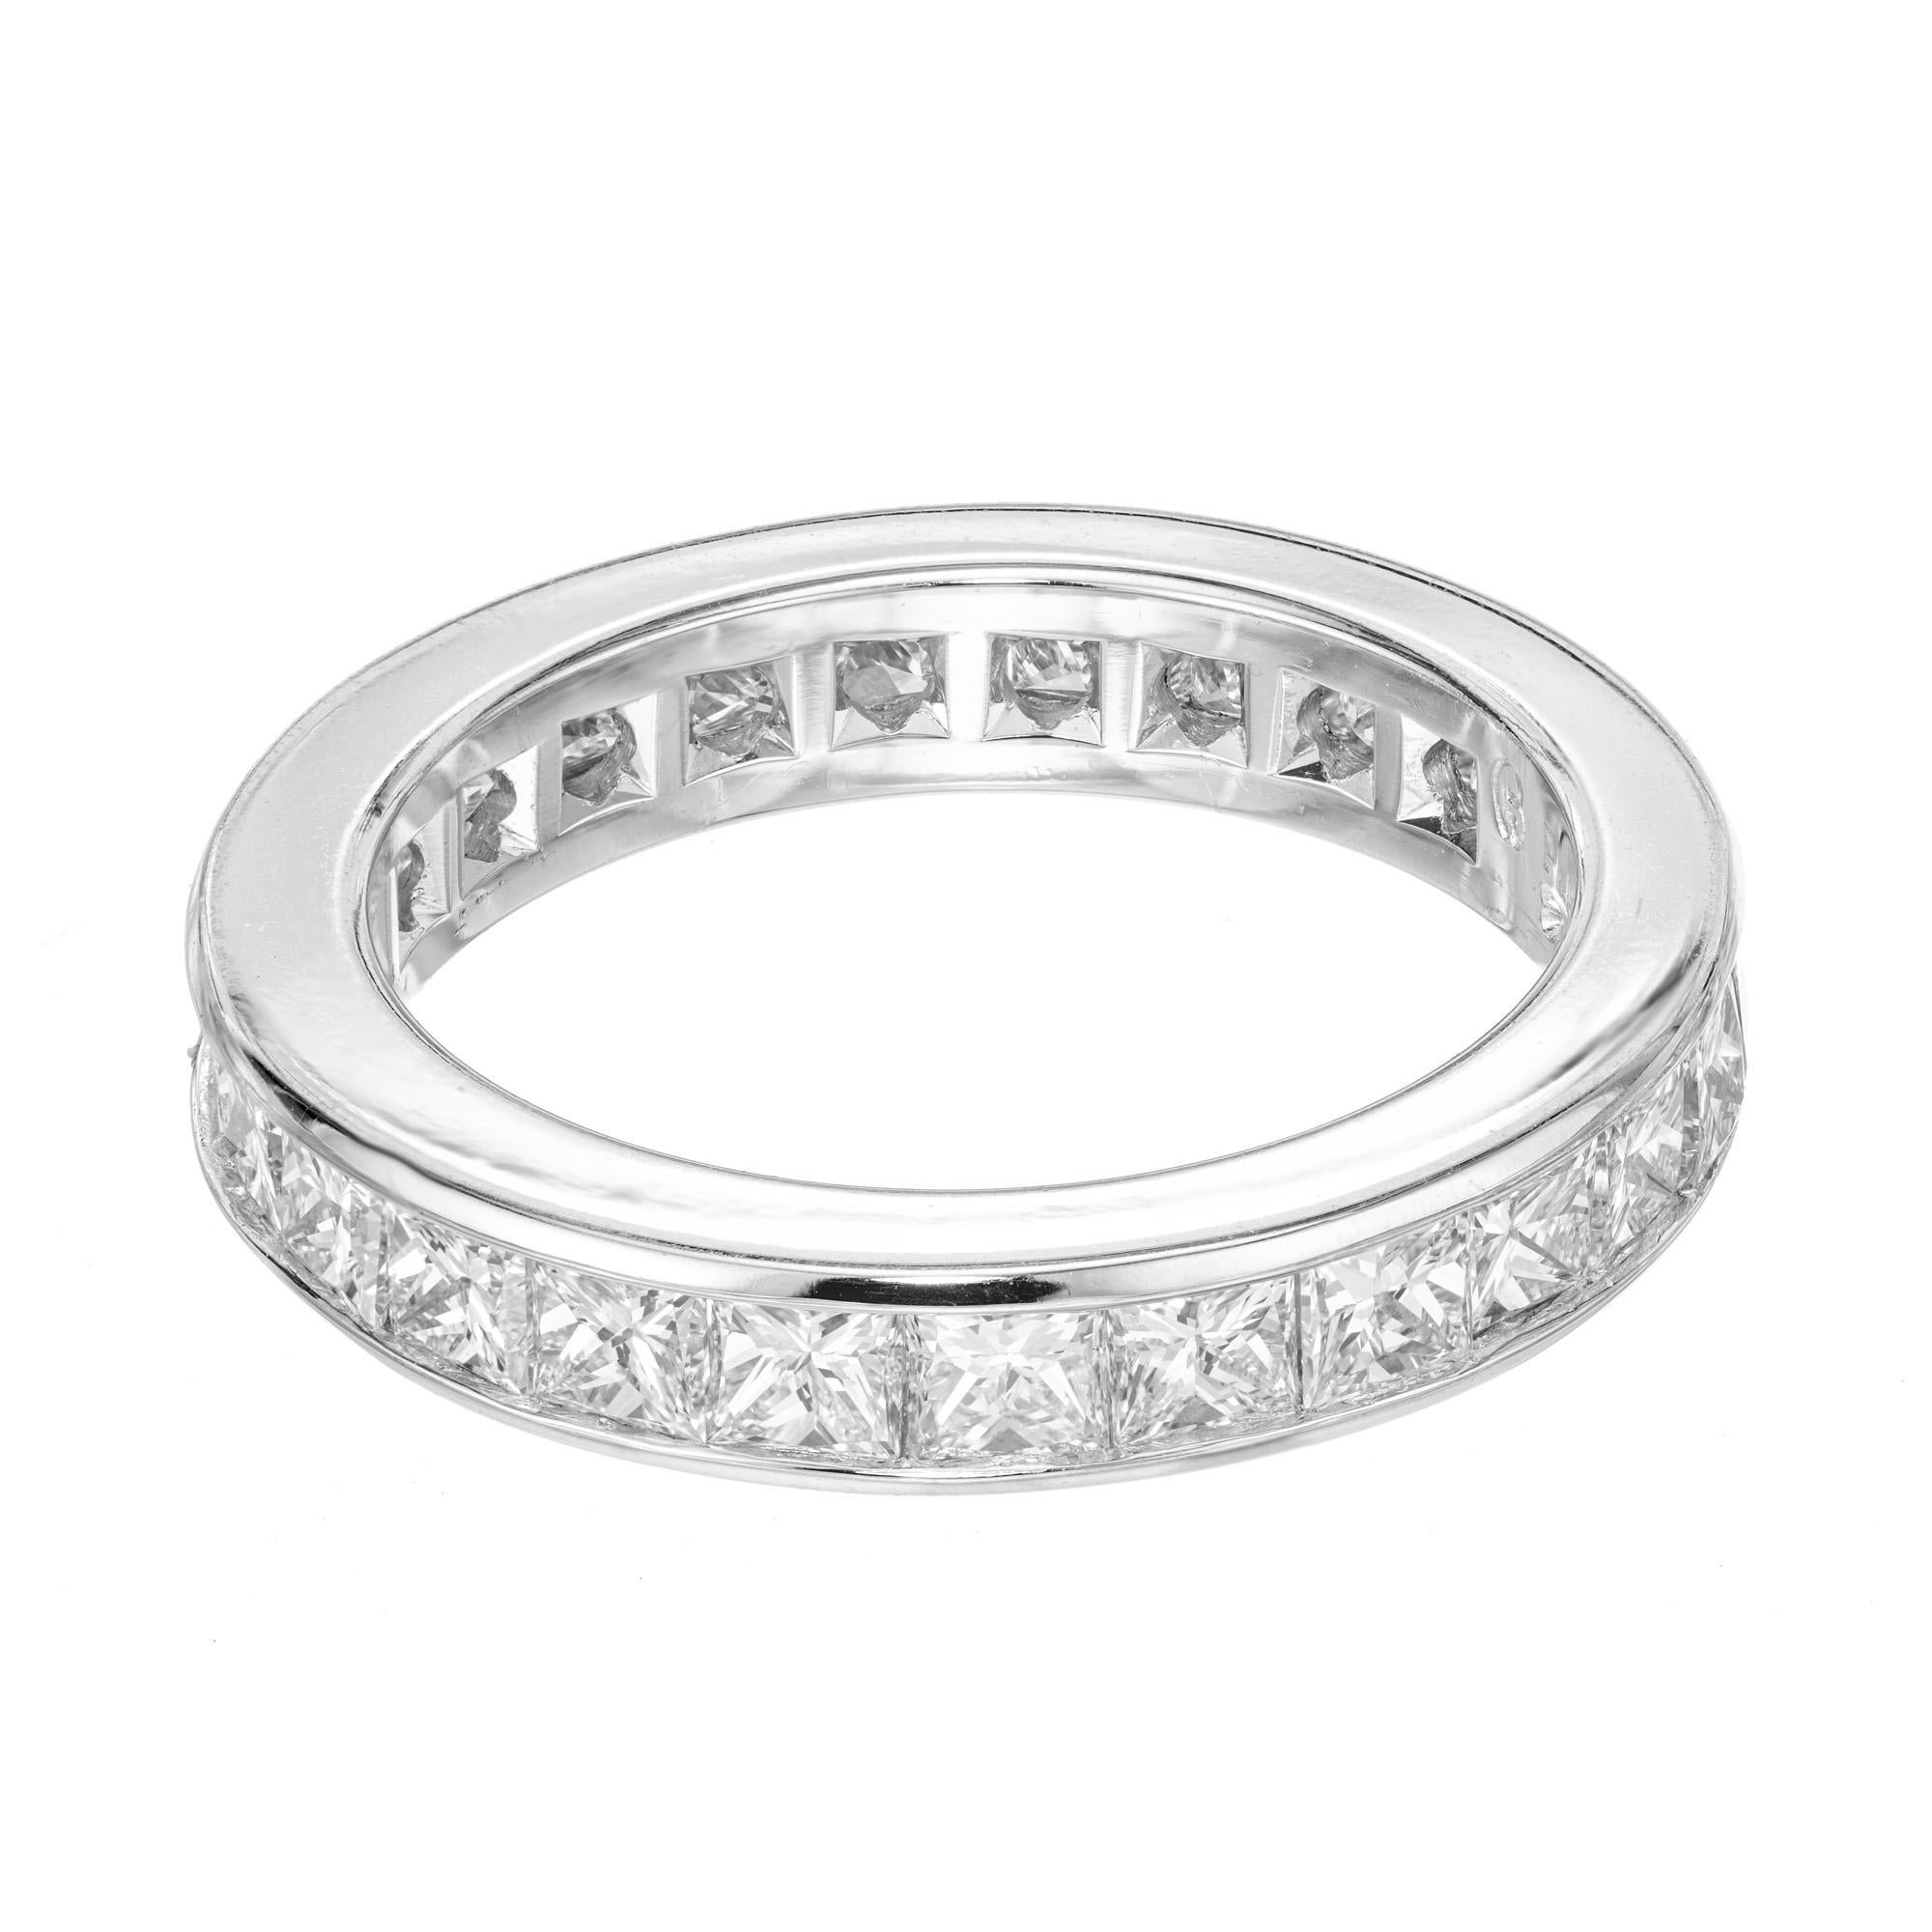 Byard F. Brogan 2.40 Carat Diamond Platinum Eternity Wedding Band Ring In Good Condition For Sale In Stamford, CT